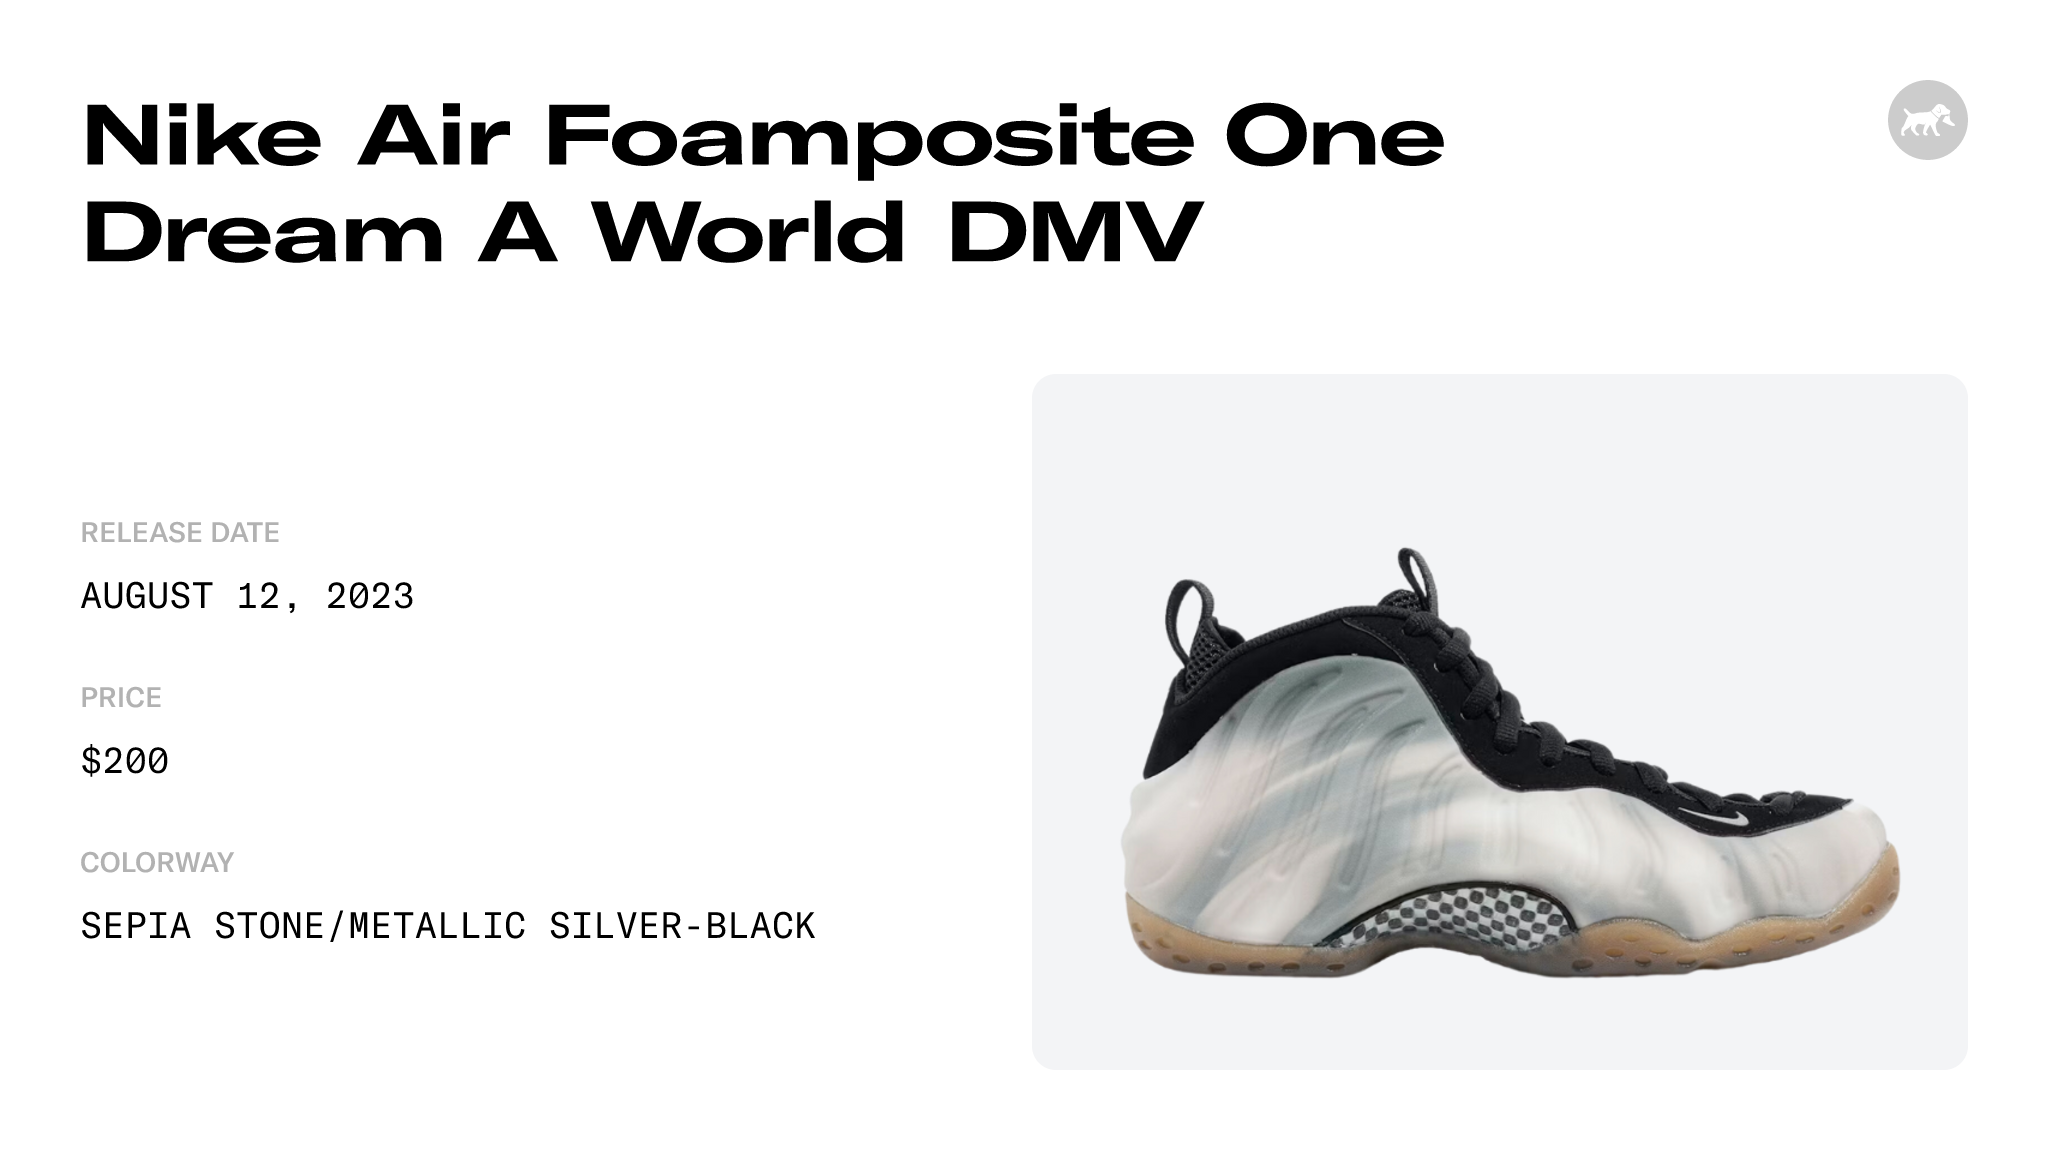 Nike Air Foamposite One 'Dream a World' DMV Exclusive Release Date